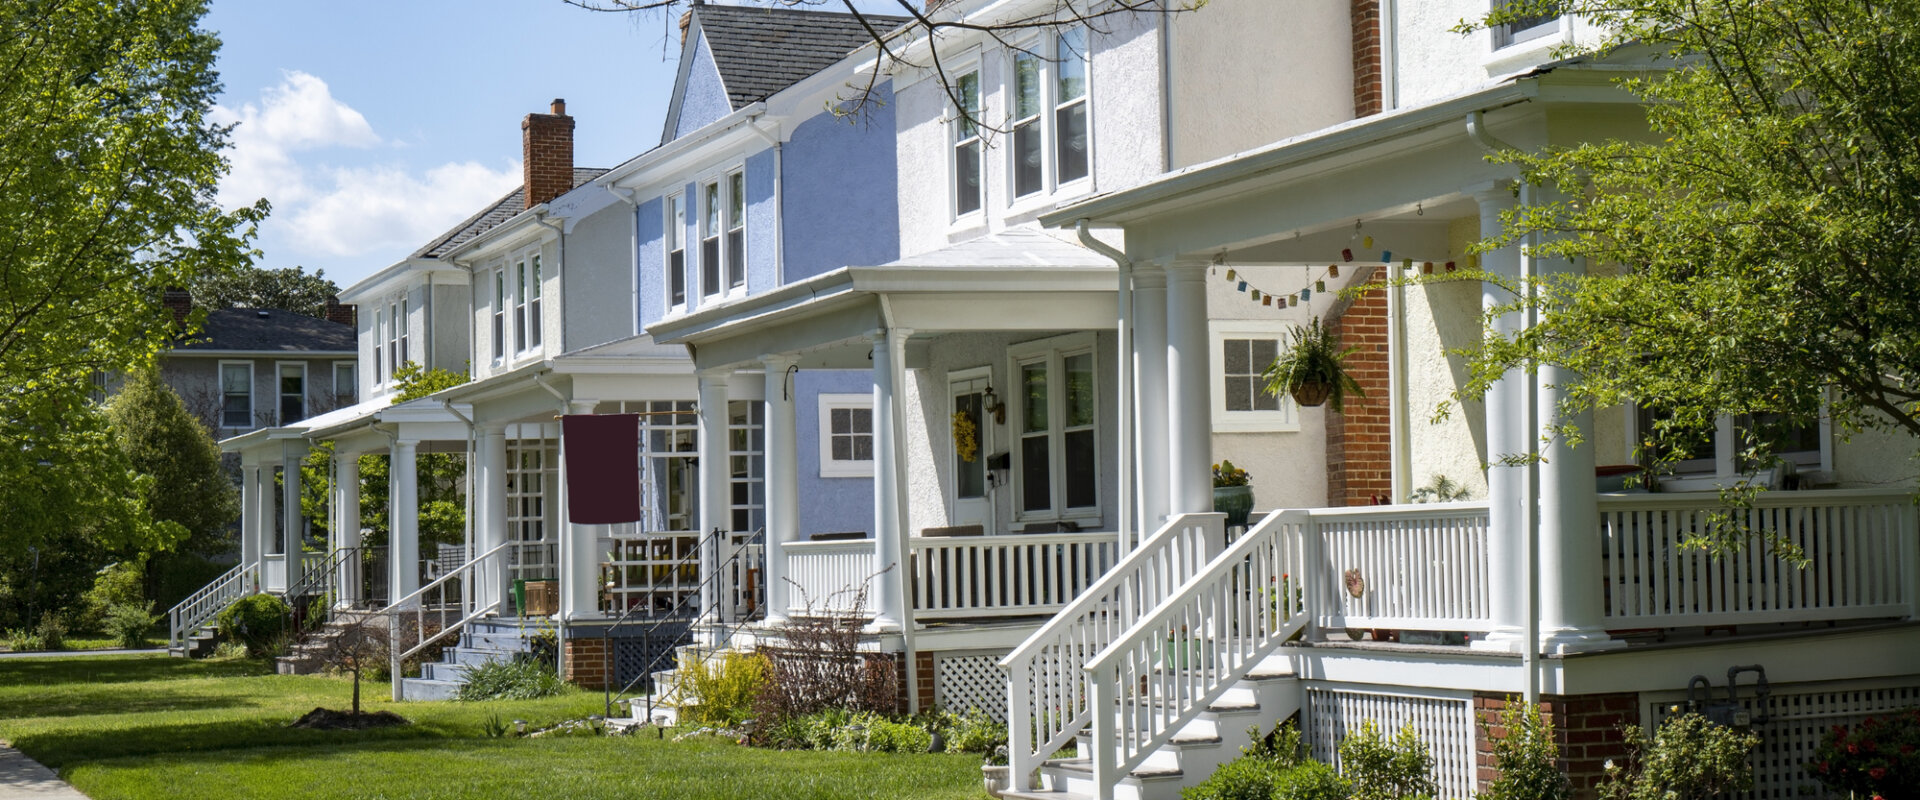 Sell Your House Rehoboth, Massachusetts